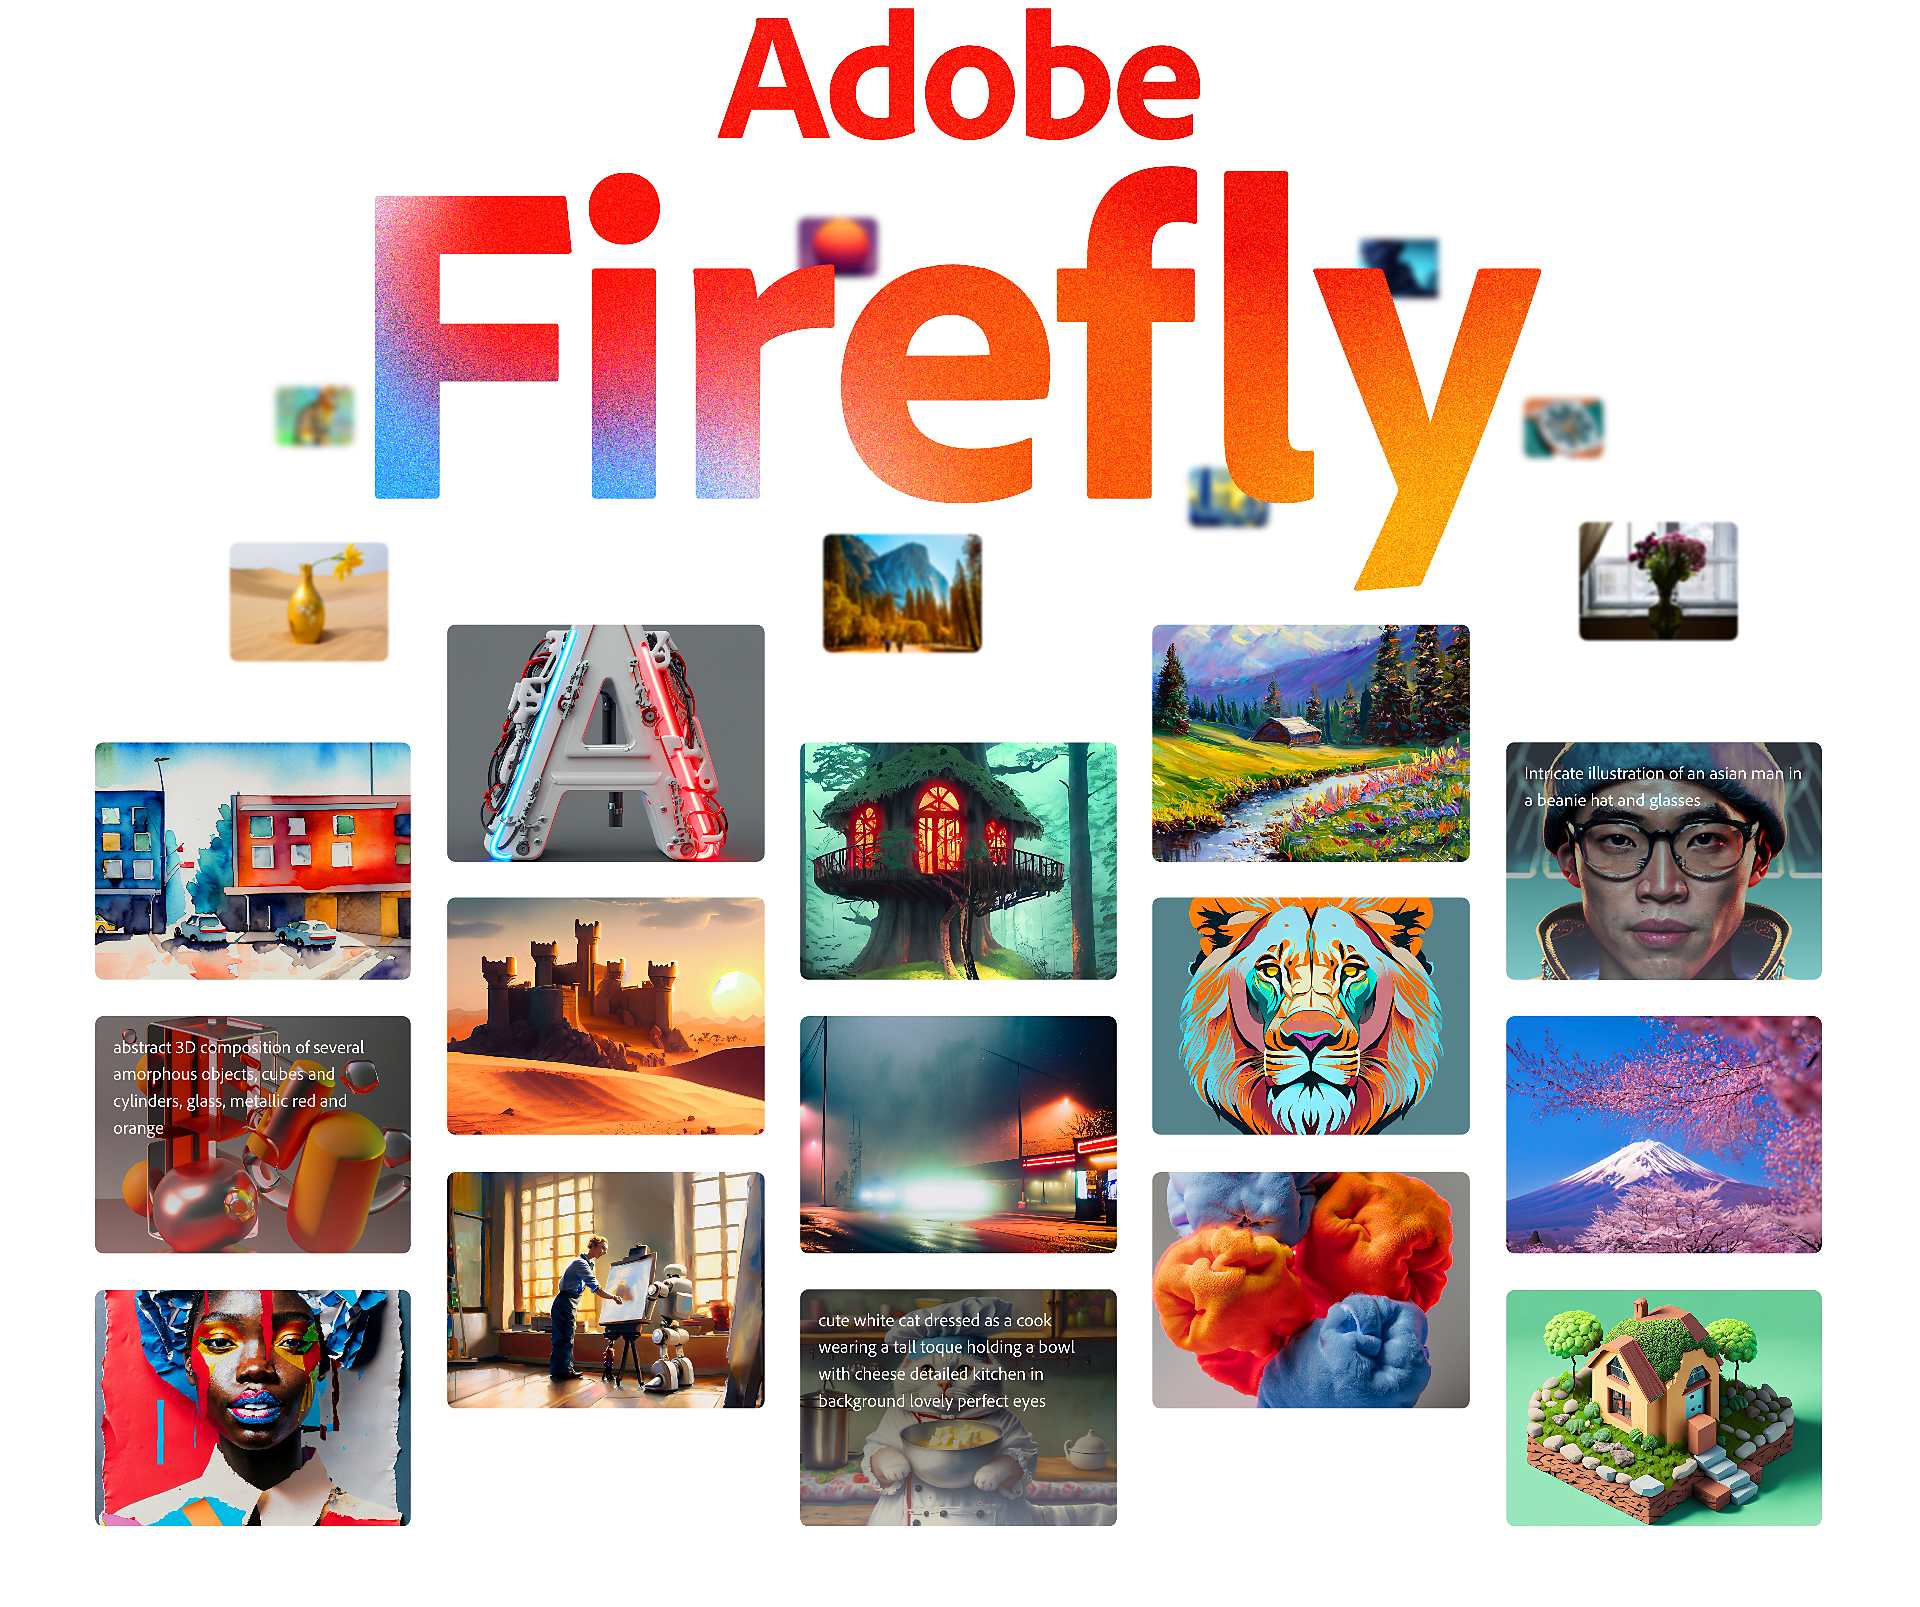 Adobe released Firefly.